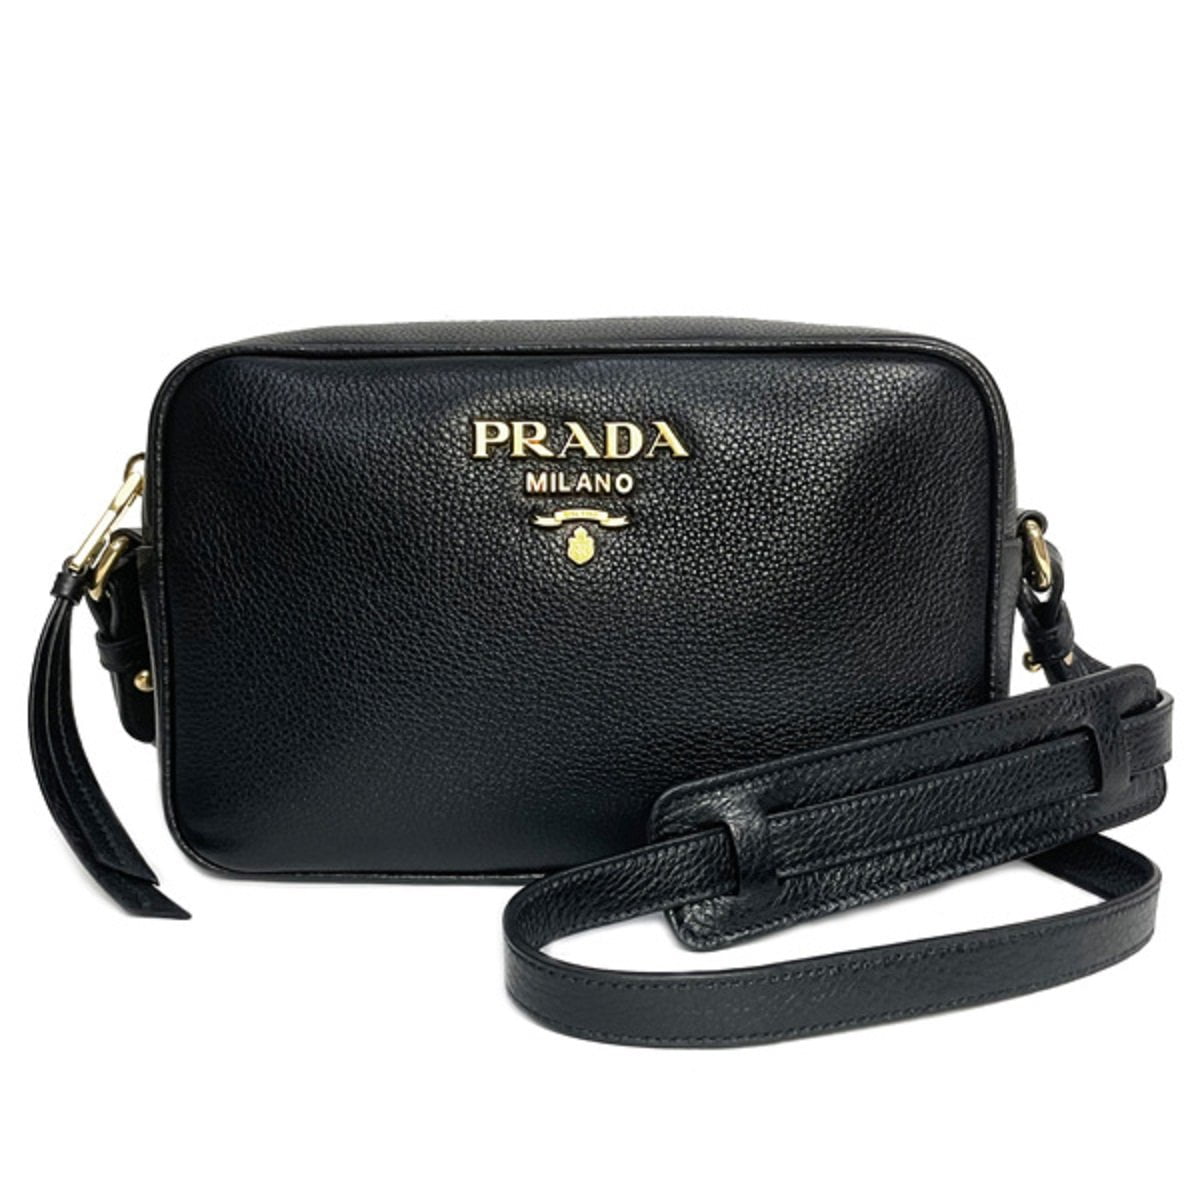 Prada Saffiano Leather Messenger Bag With Pouch - F0002 Nero | Editorialist